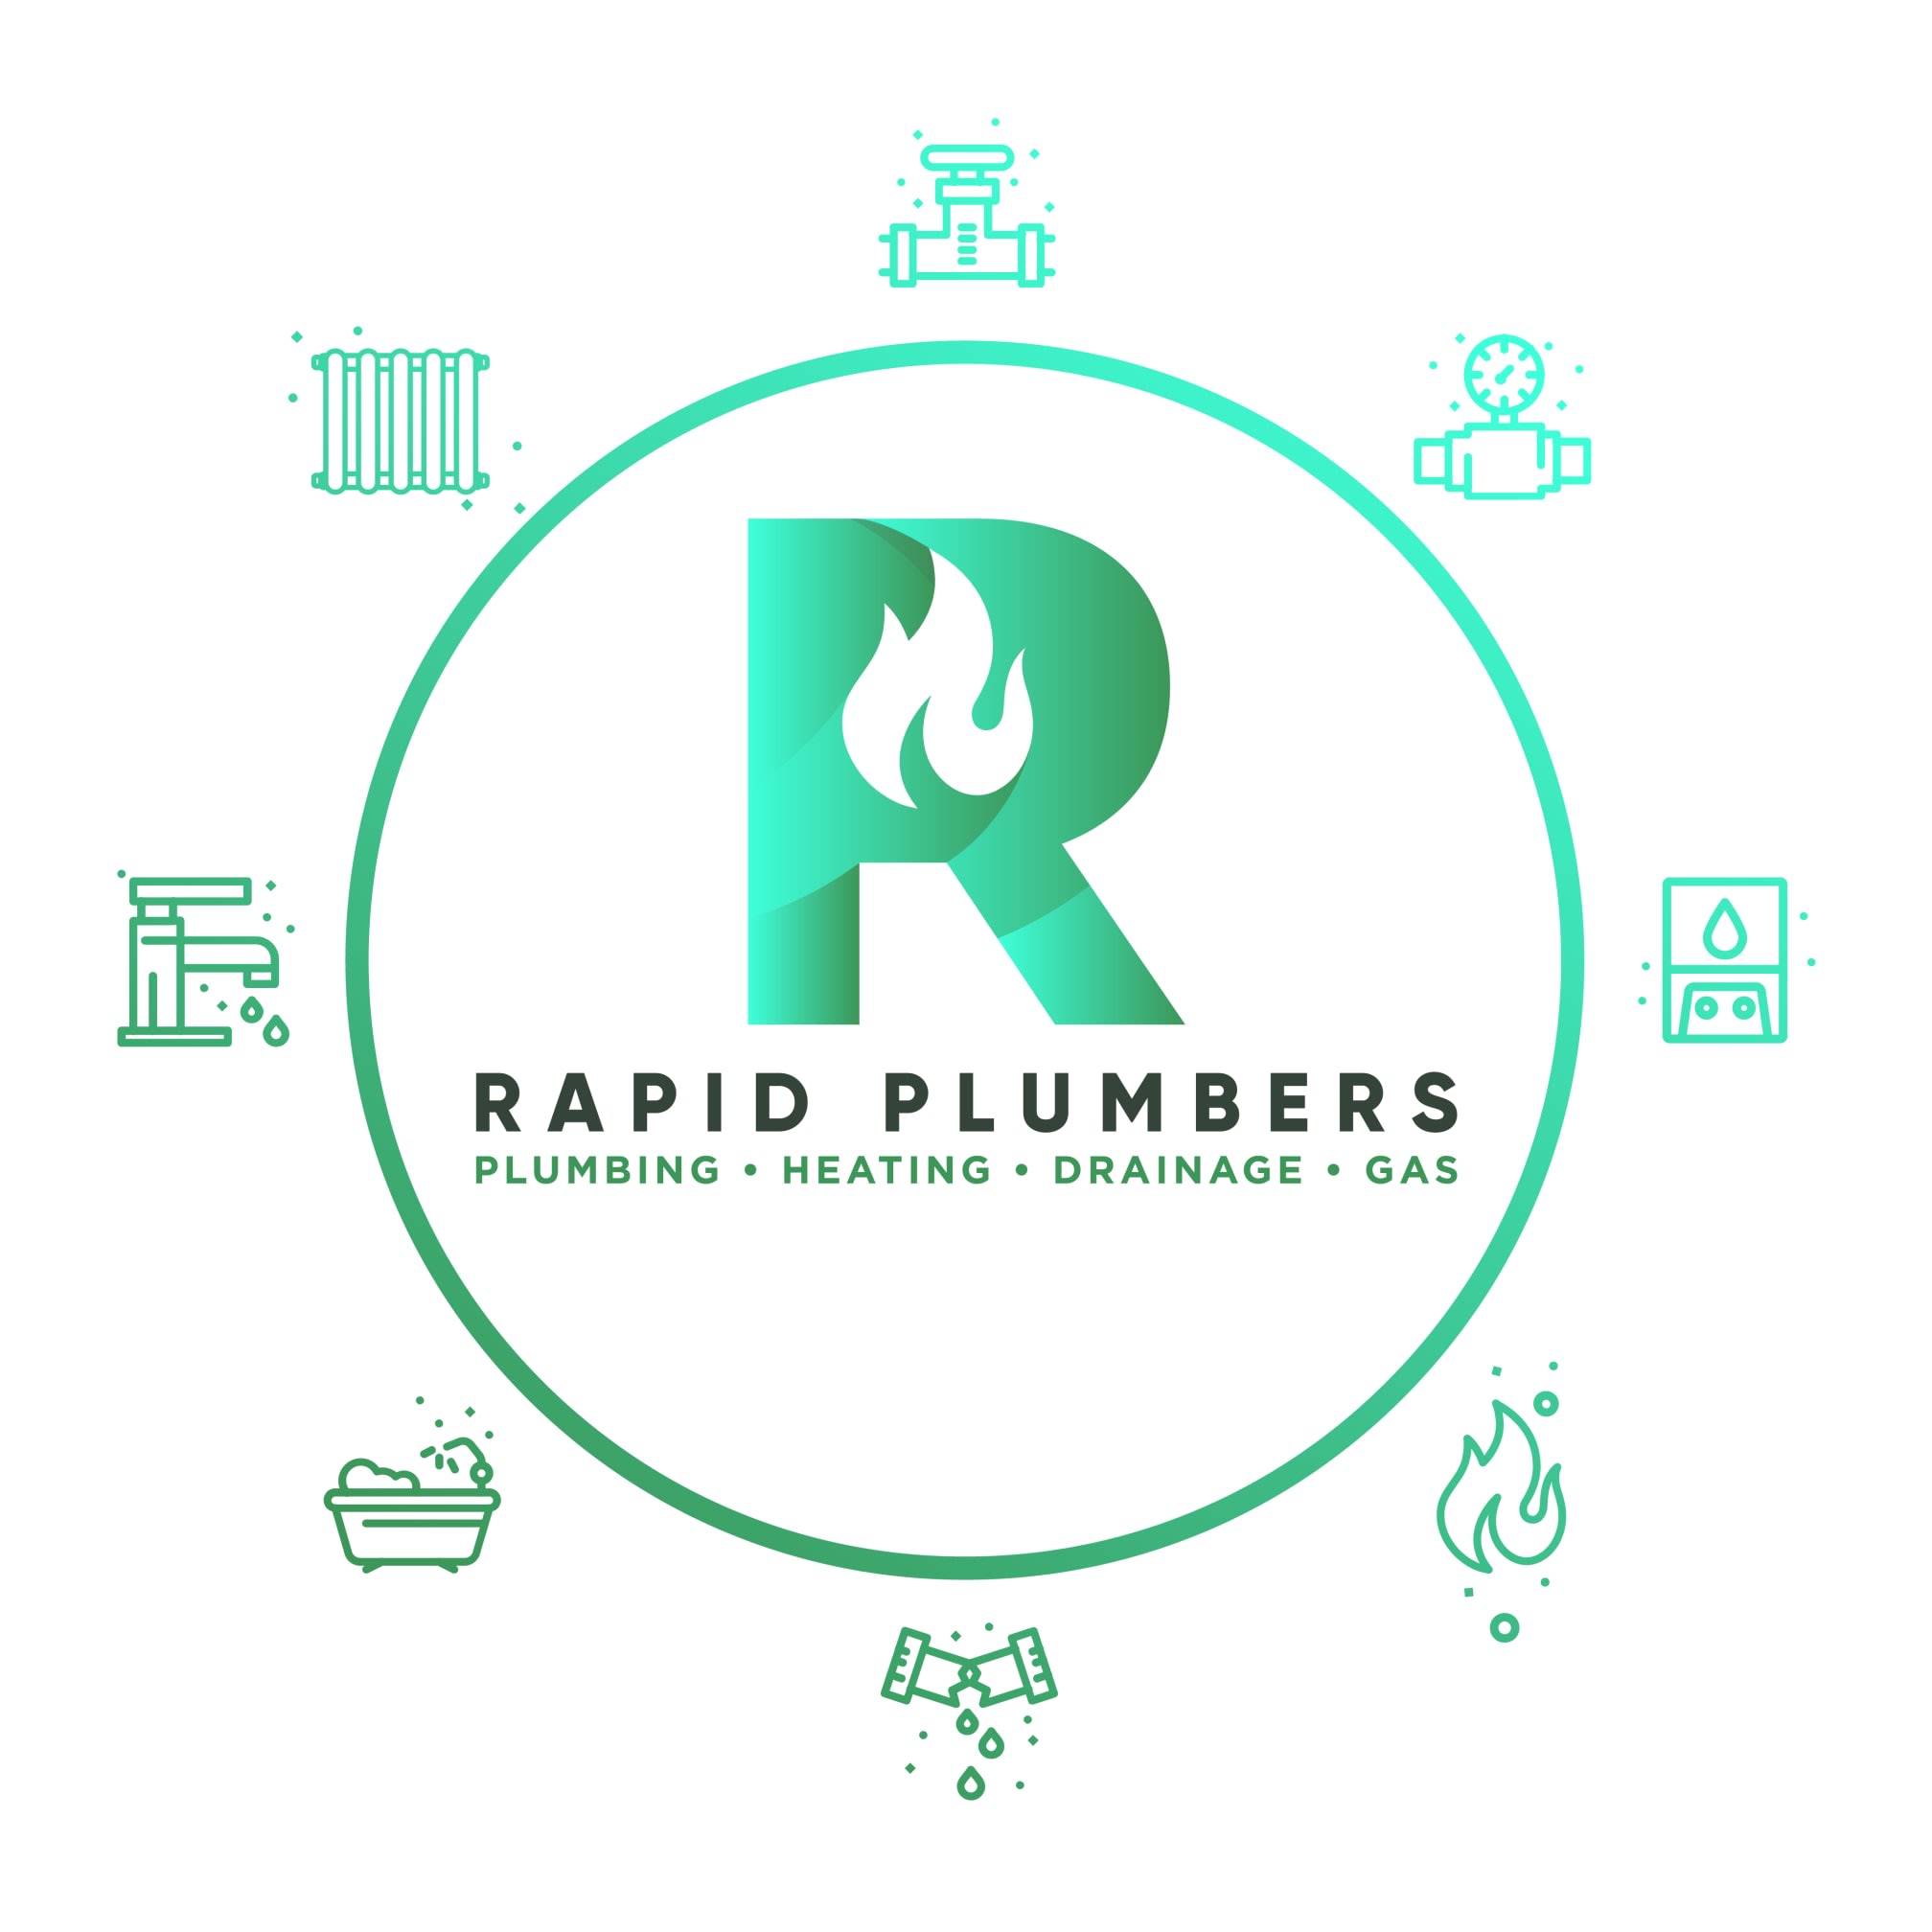 The Rapid Plumbers Logo